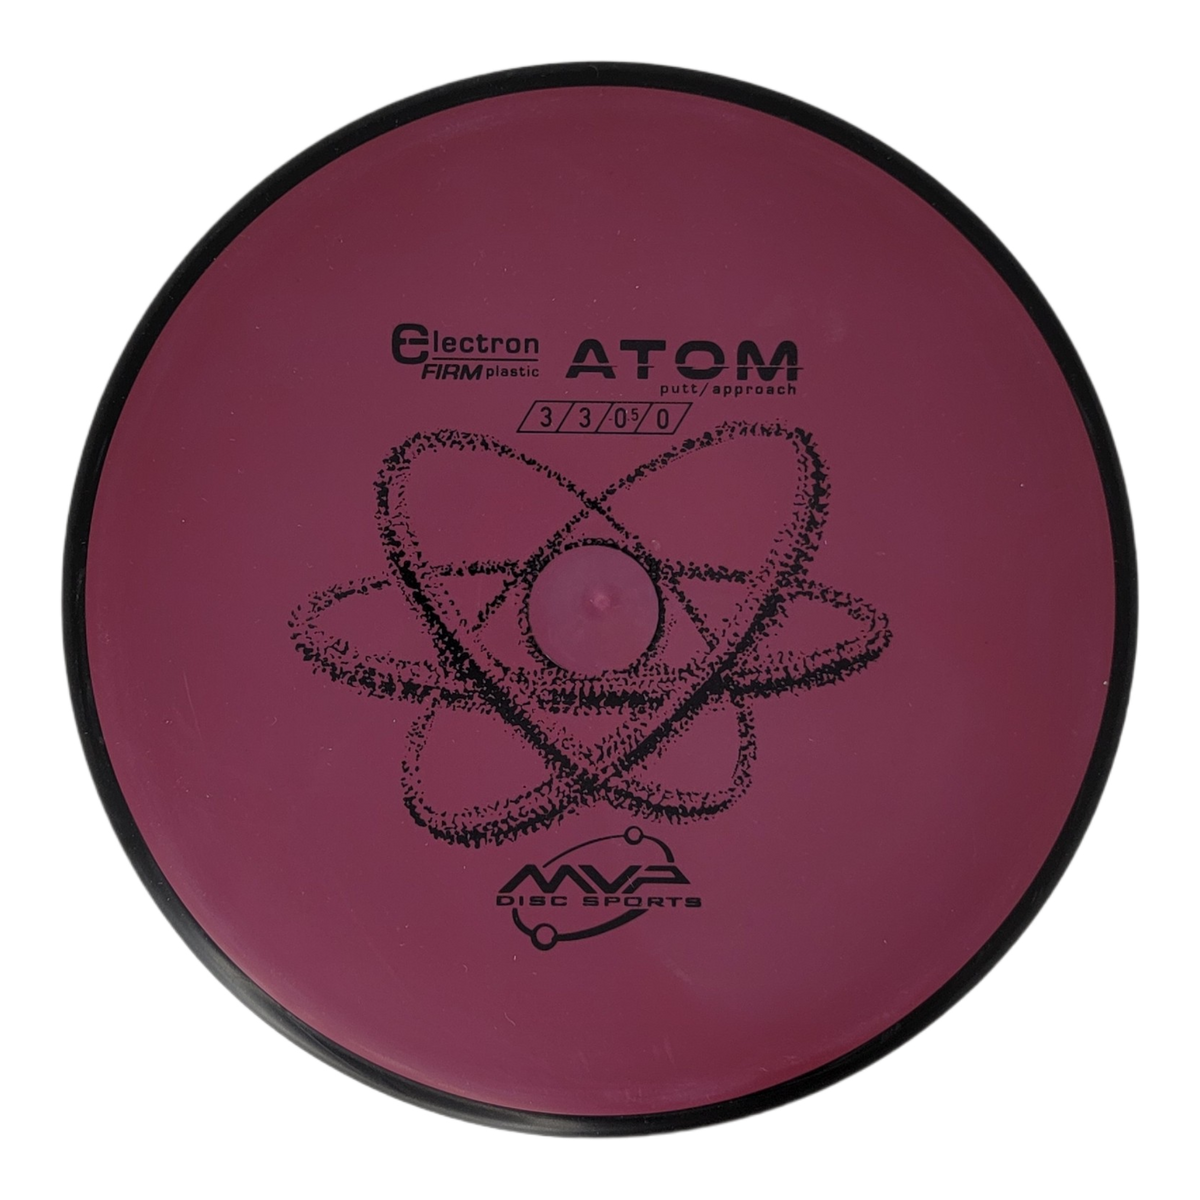 MVP Electron (Firm) Atom